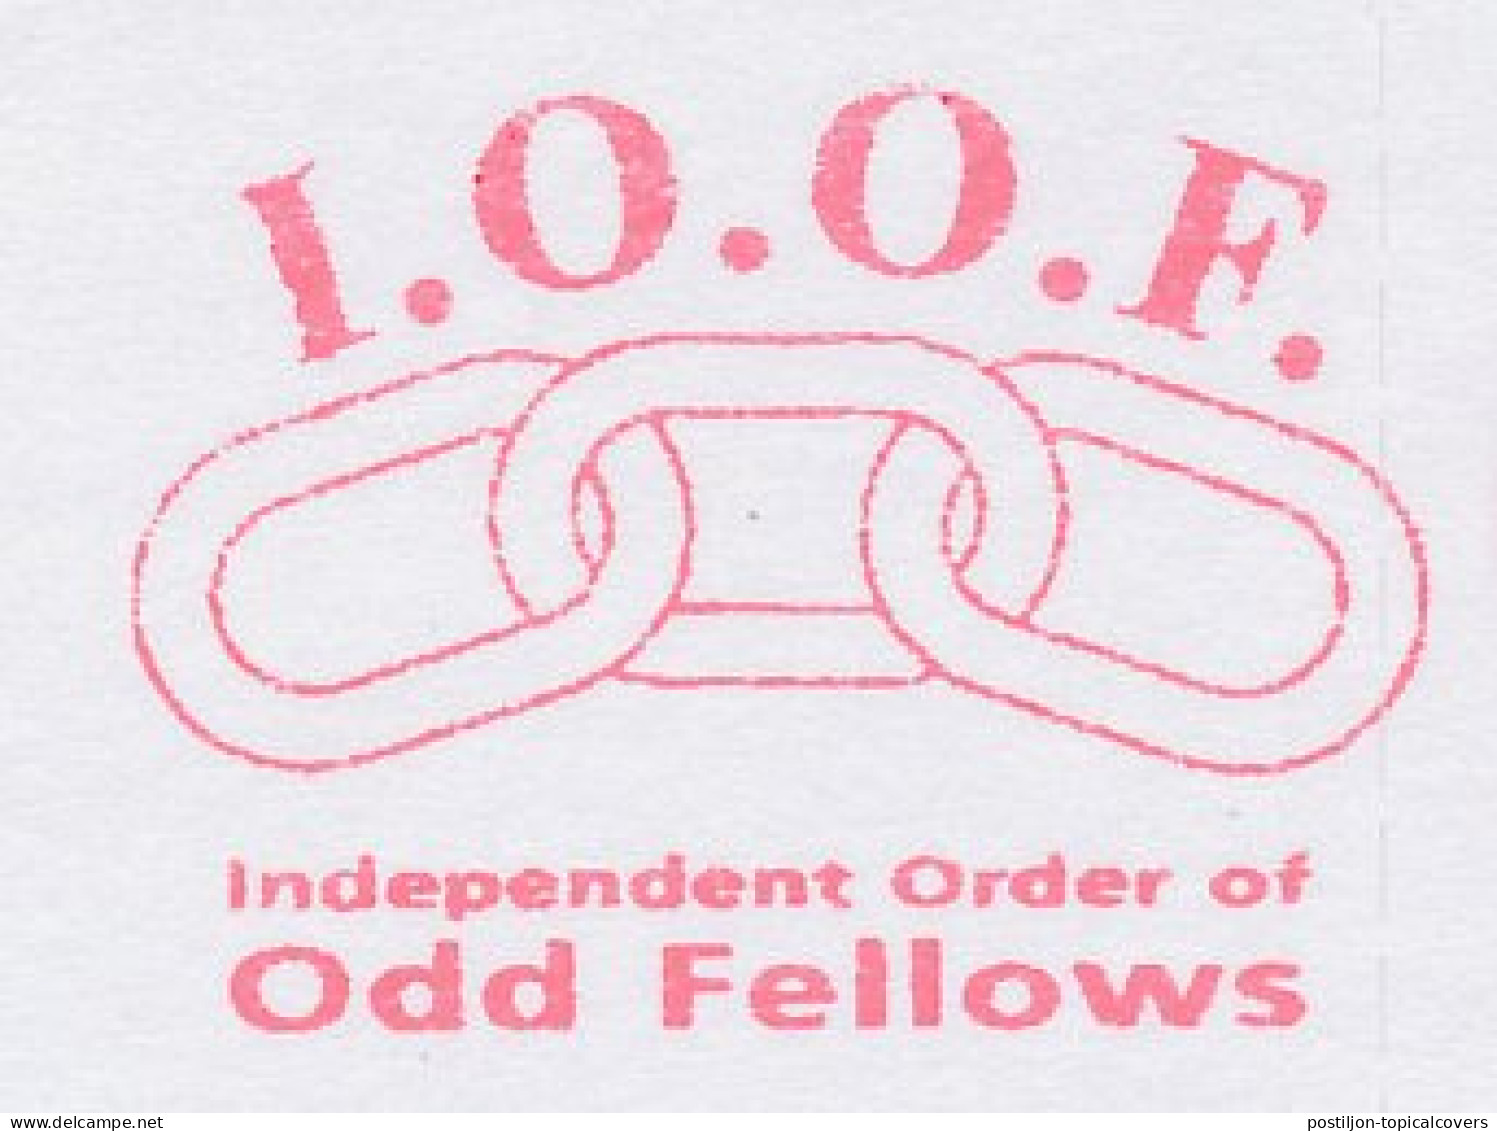 Meter Proof / Test Strip FRAMA Supplier Netherlands I.O.O.F - Independent Order Of Odd Fellows - Freemasonry